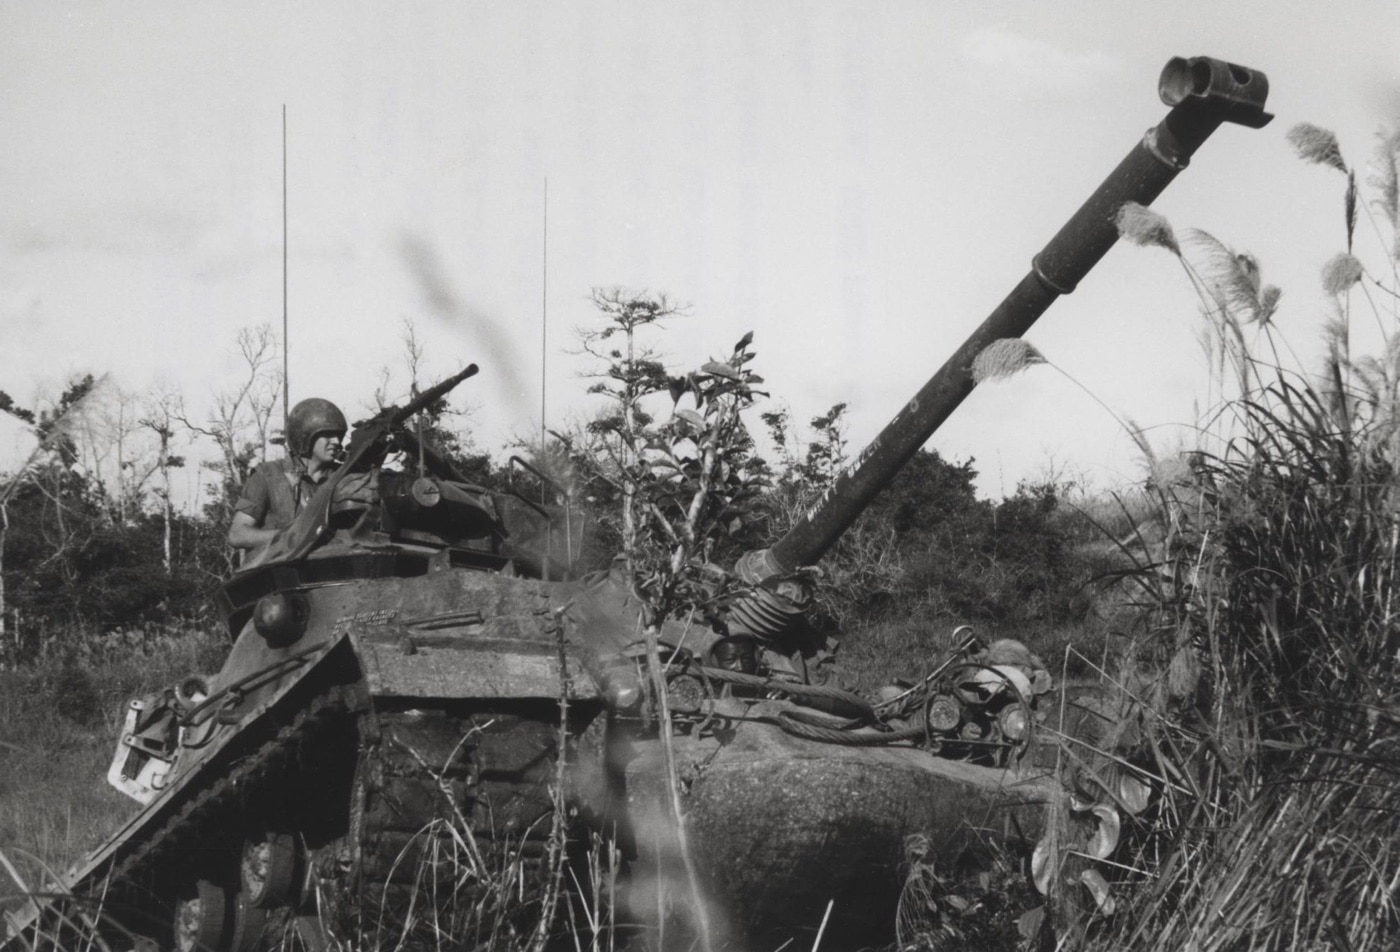 usmc m-48 tank in combat during vietnam war